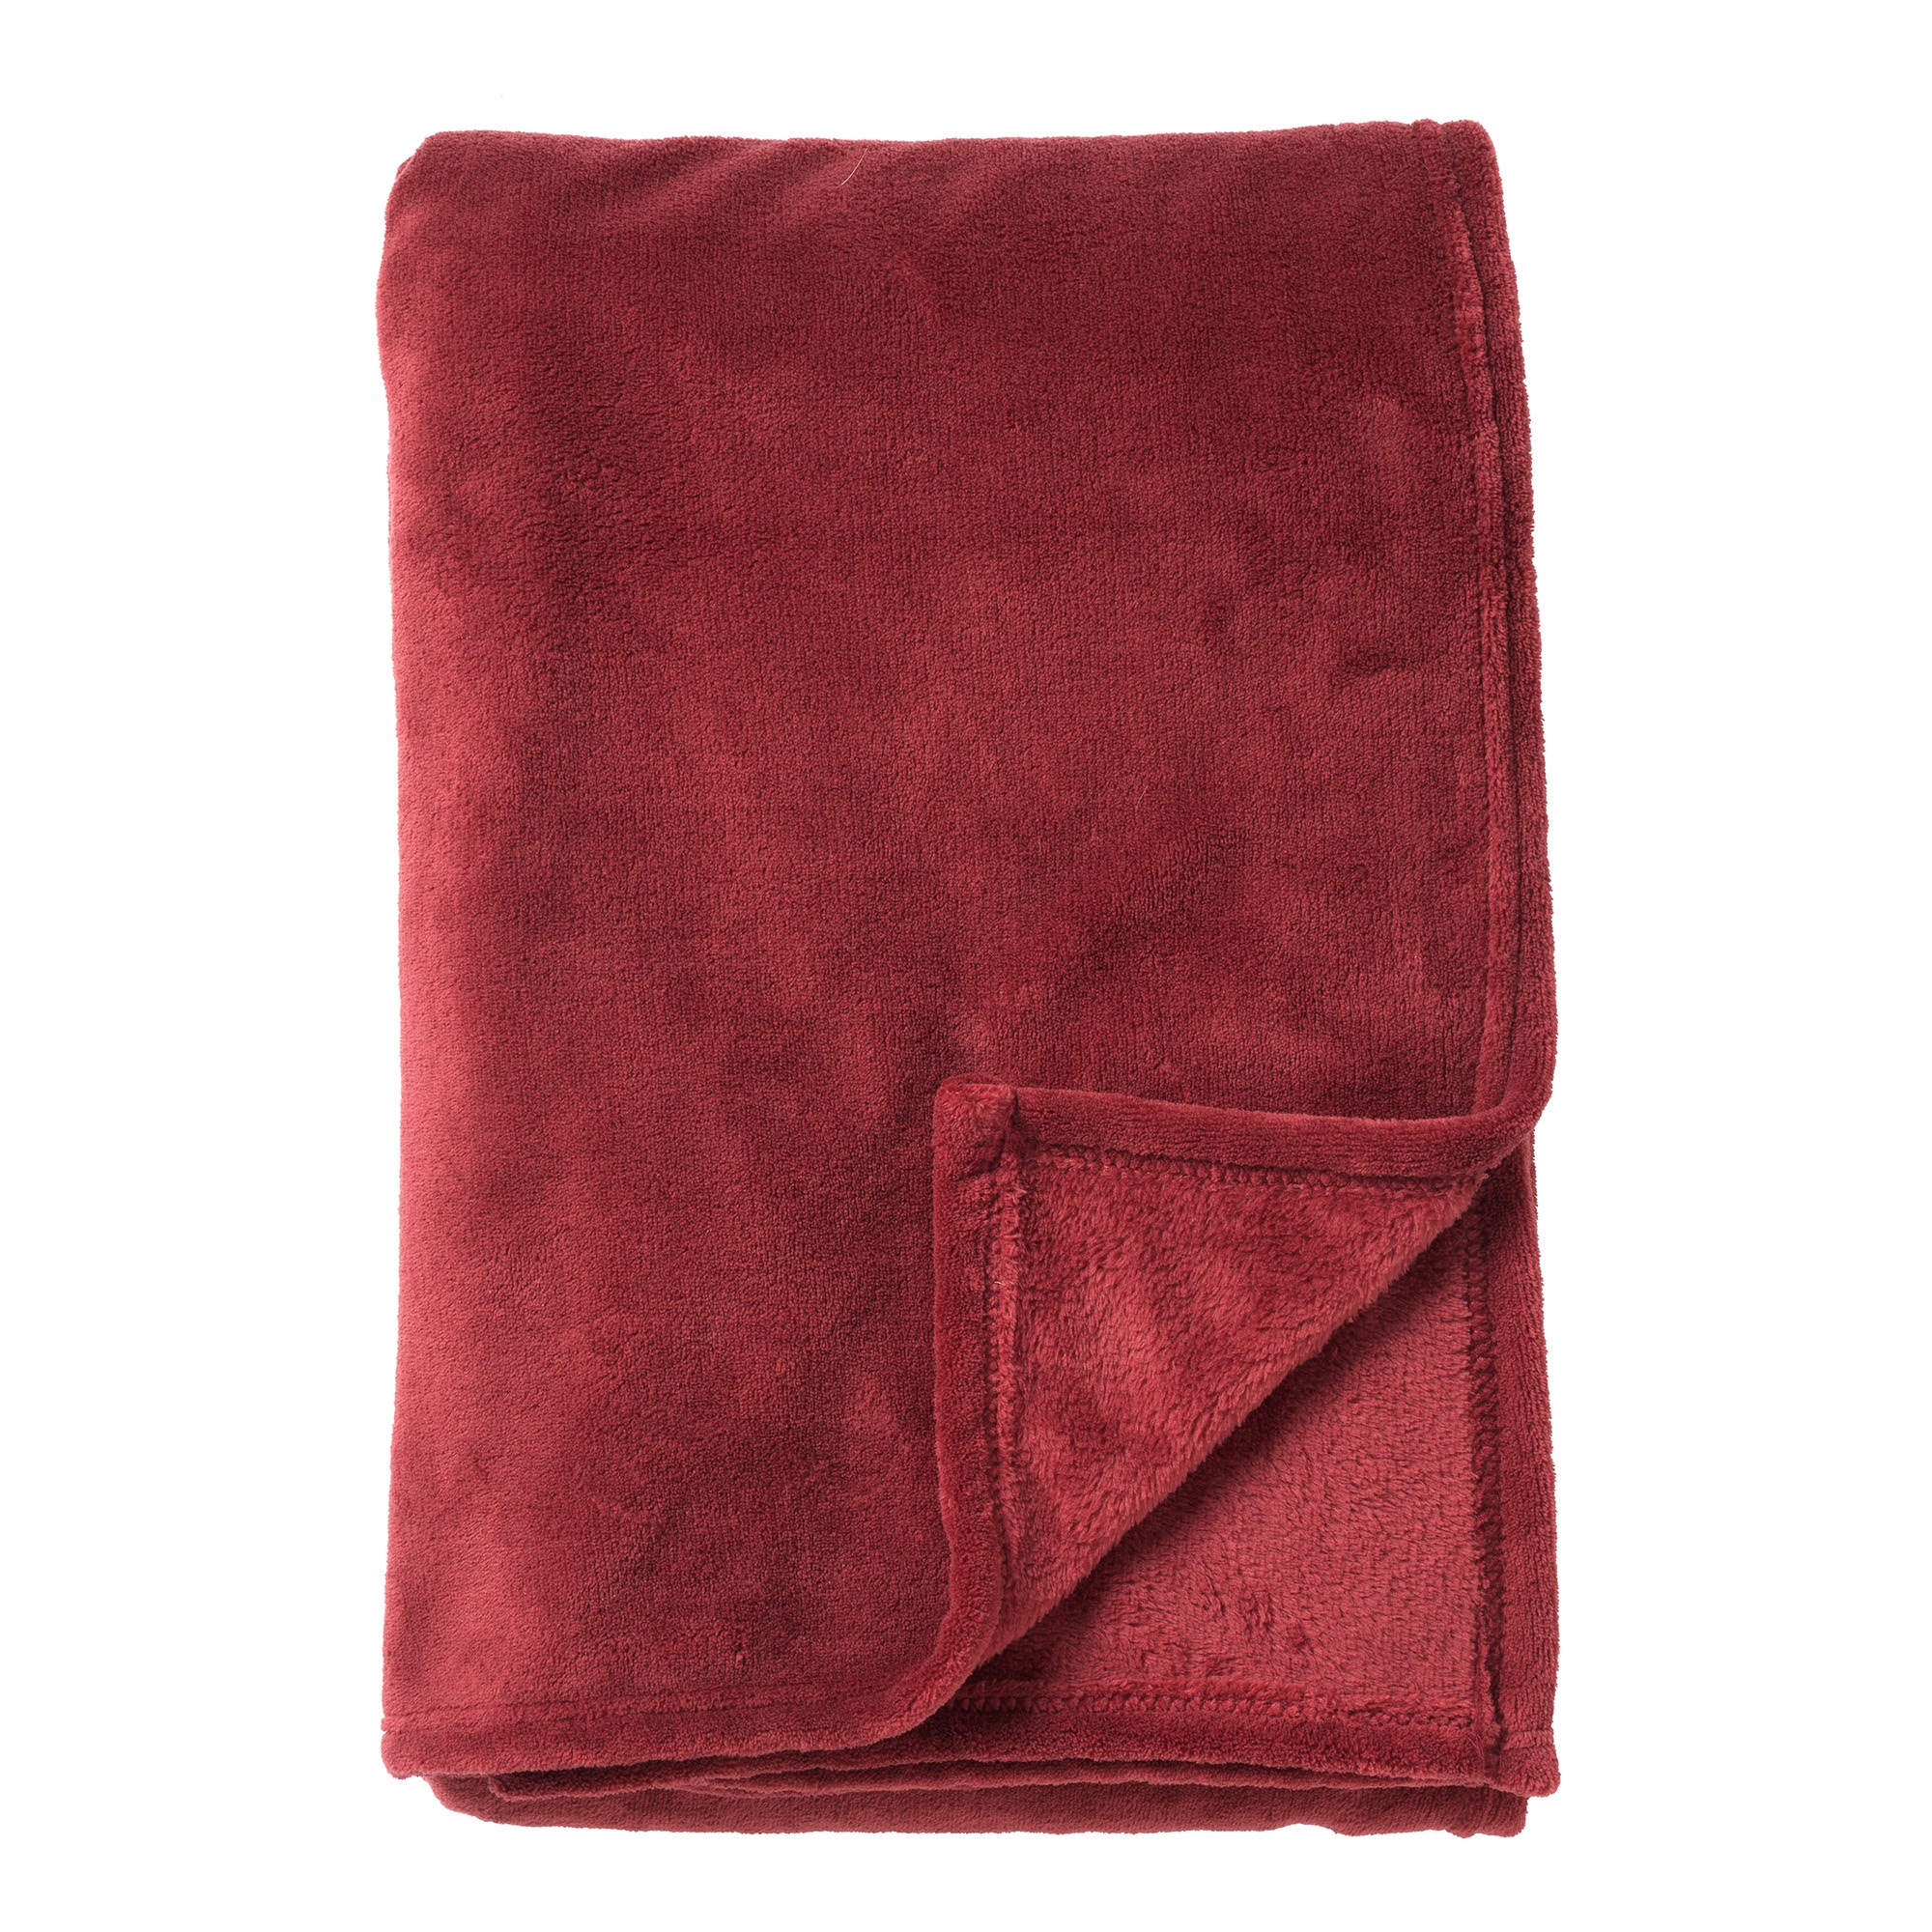 HARVEY - Plaid 150x200 cm - superzachte deken van fleece - Merlot - bordeaux rood